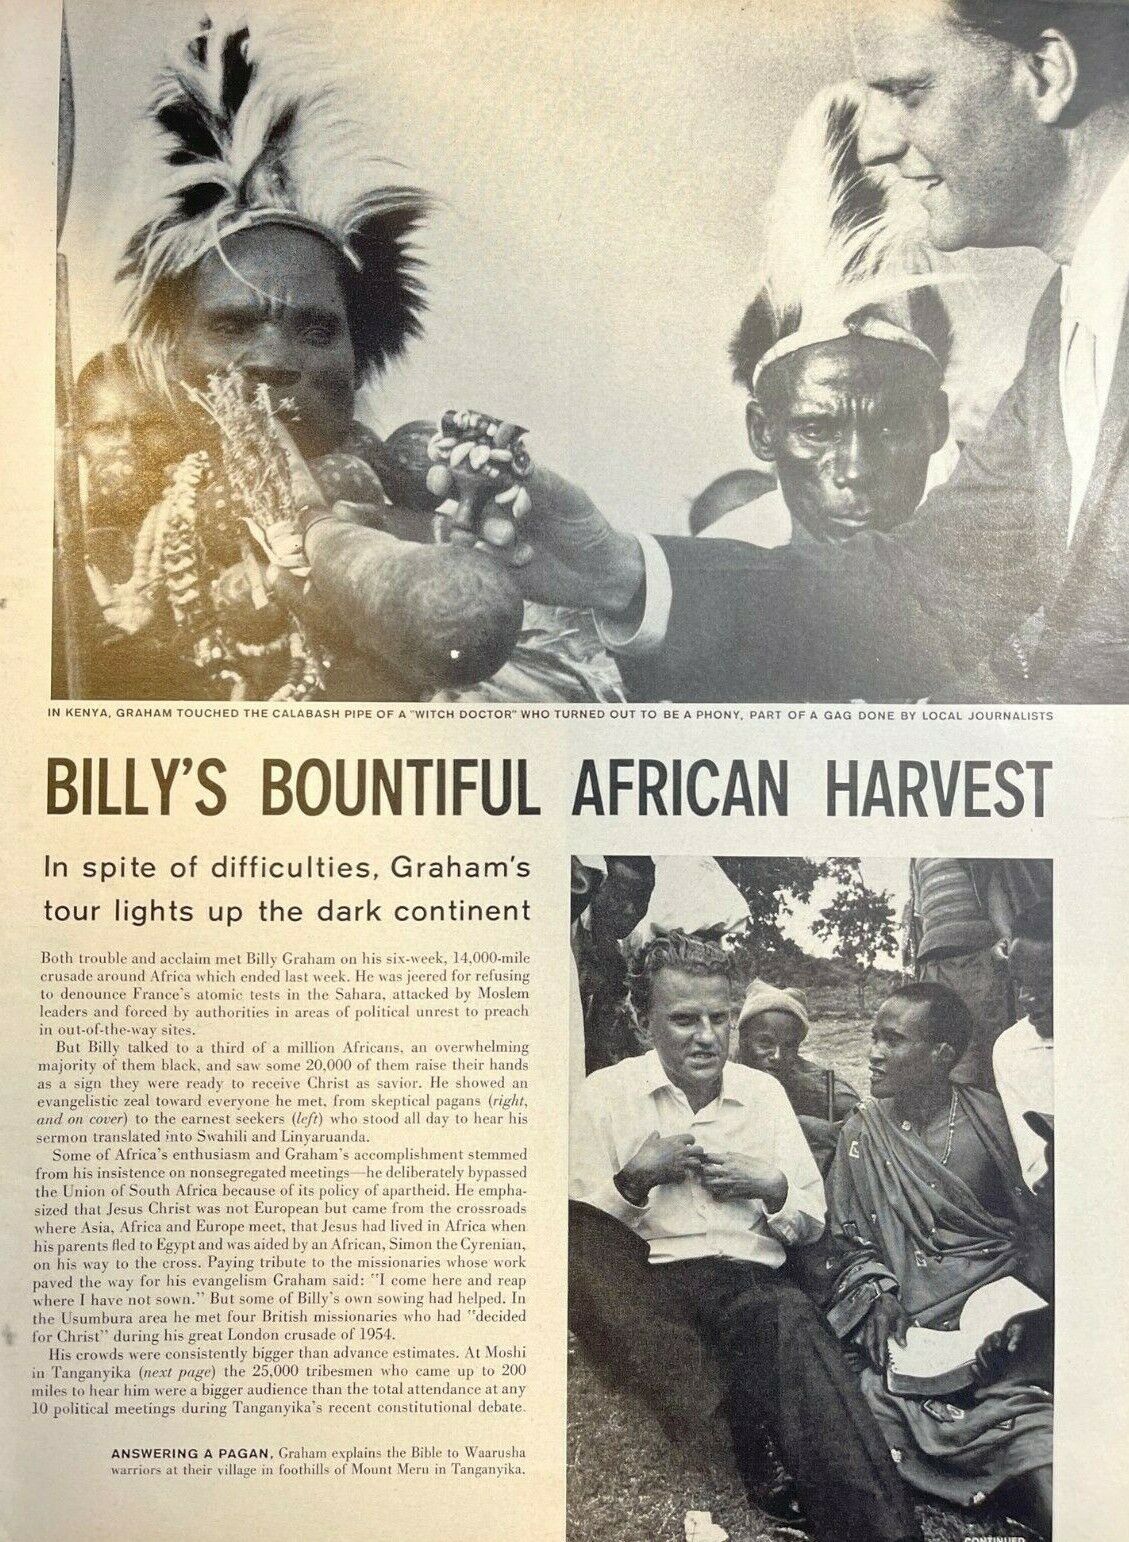 1960 Reverend Billy Graham in Africa illustrated